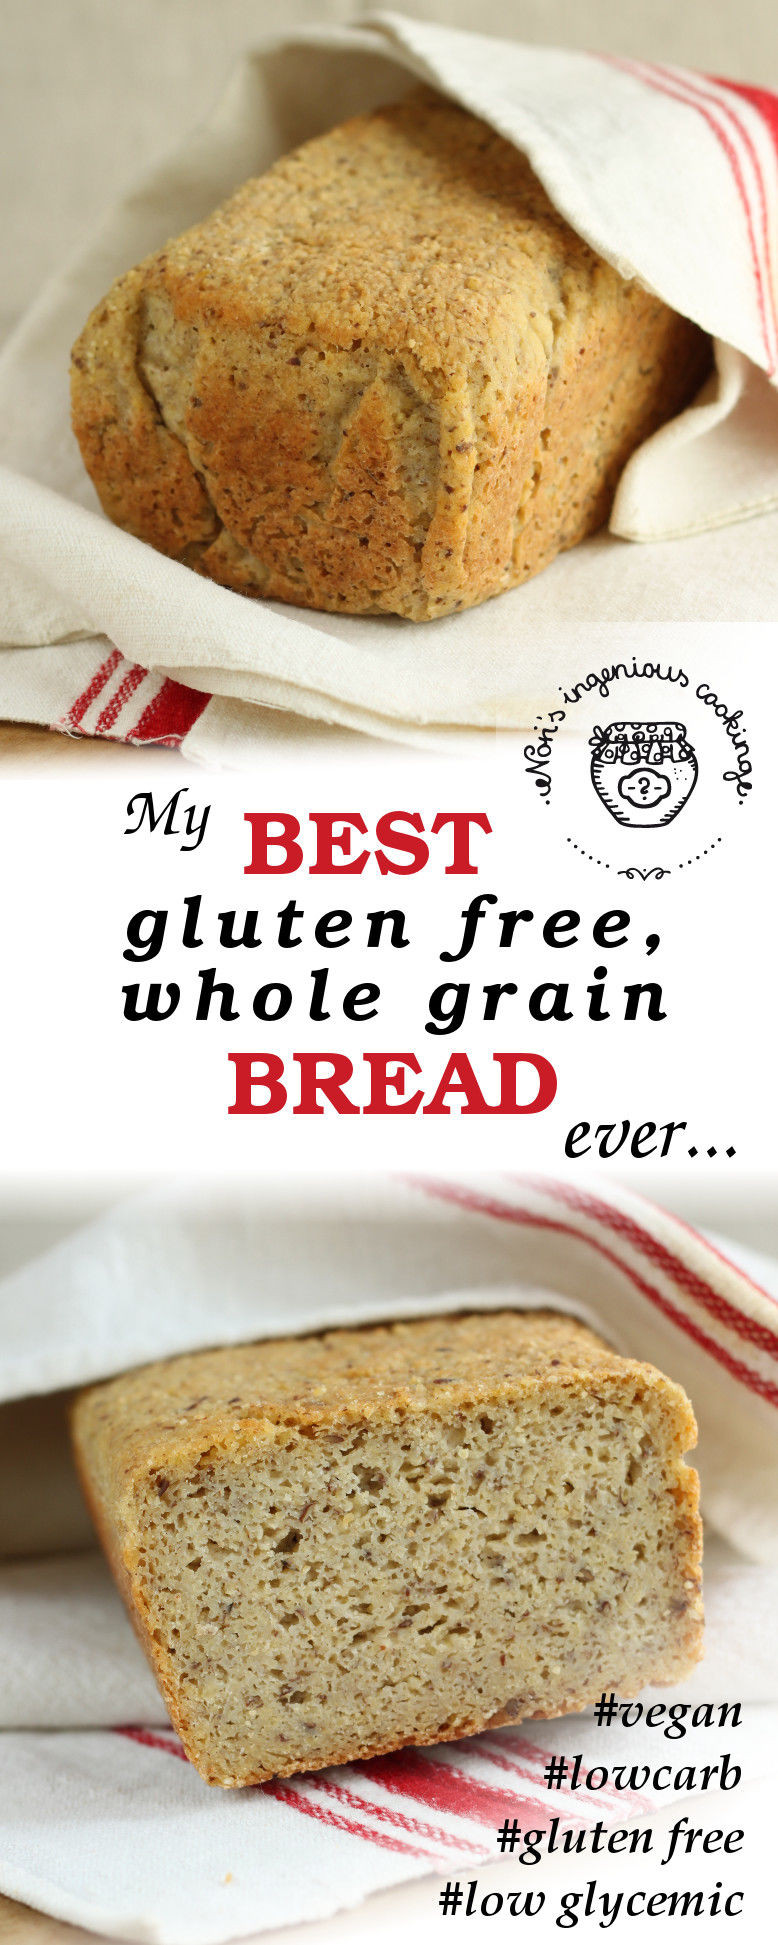 Gluten And Wheat Free Bread
 My best gluten free whole grain bread ever vegan